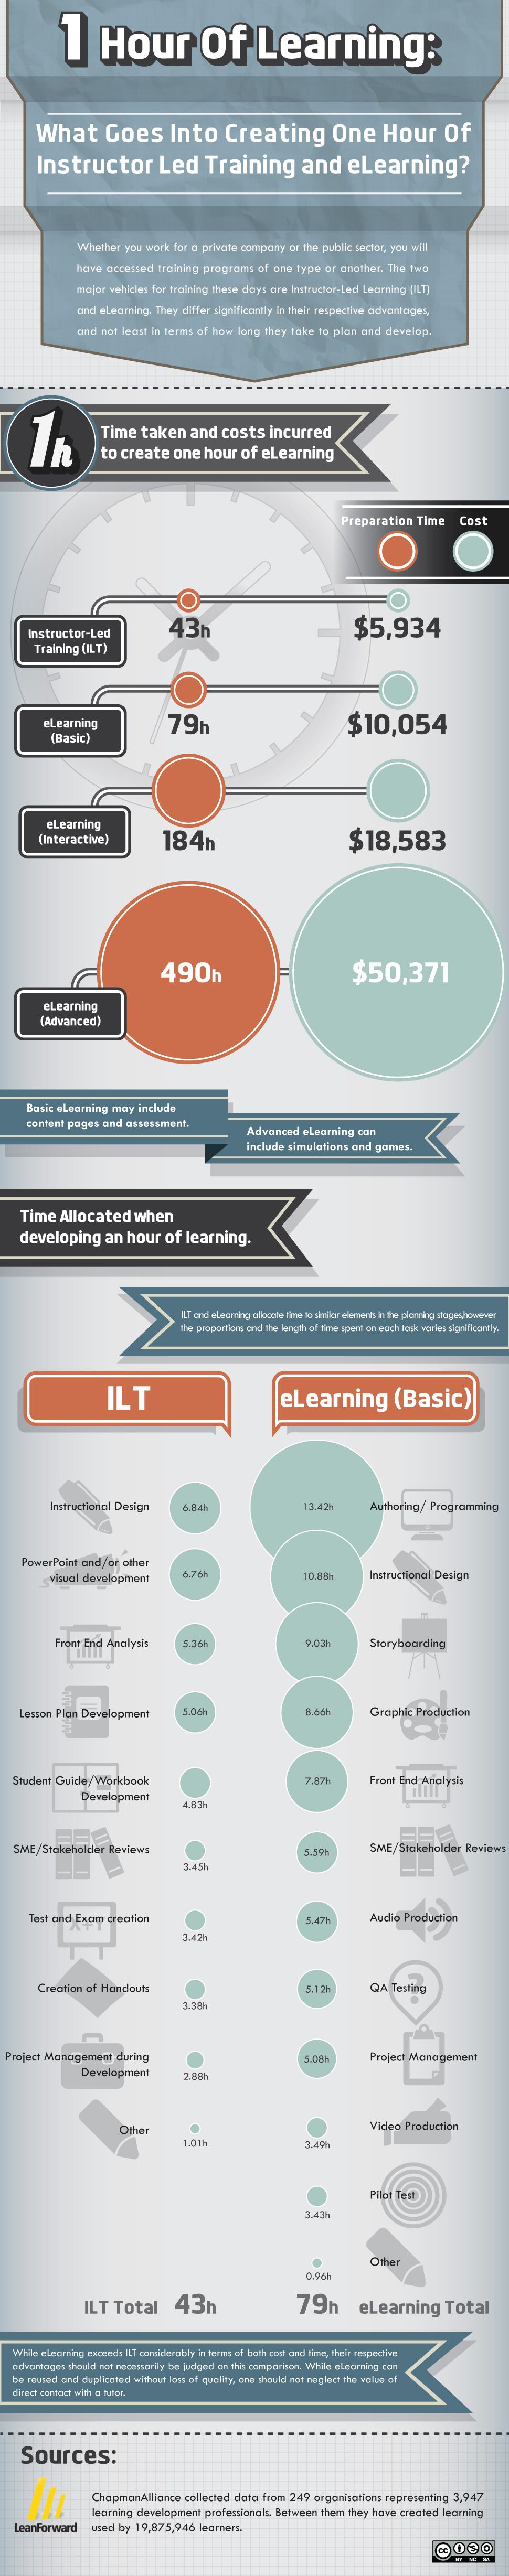 active learning time v instruction time